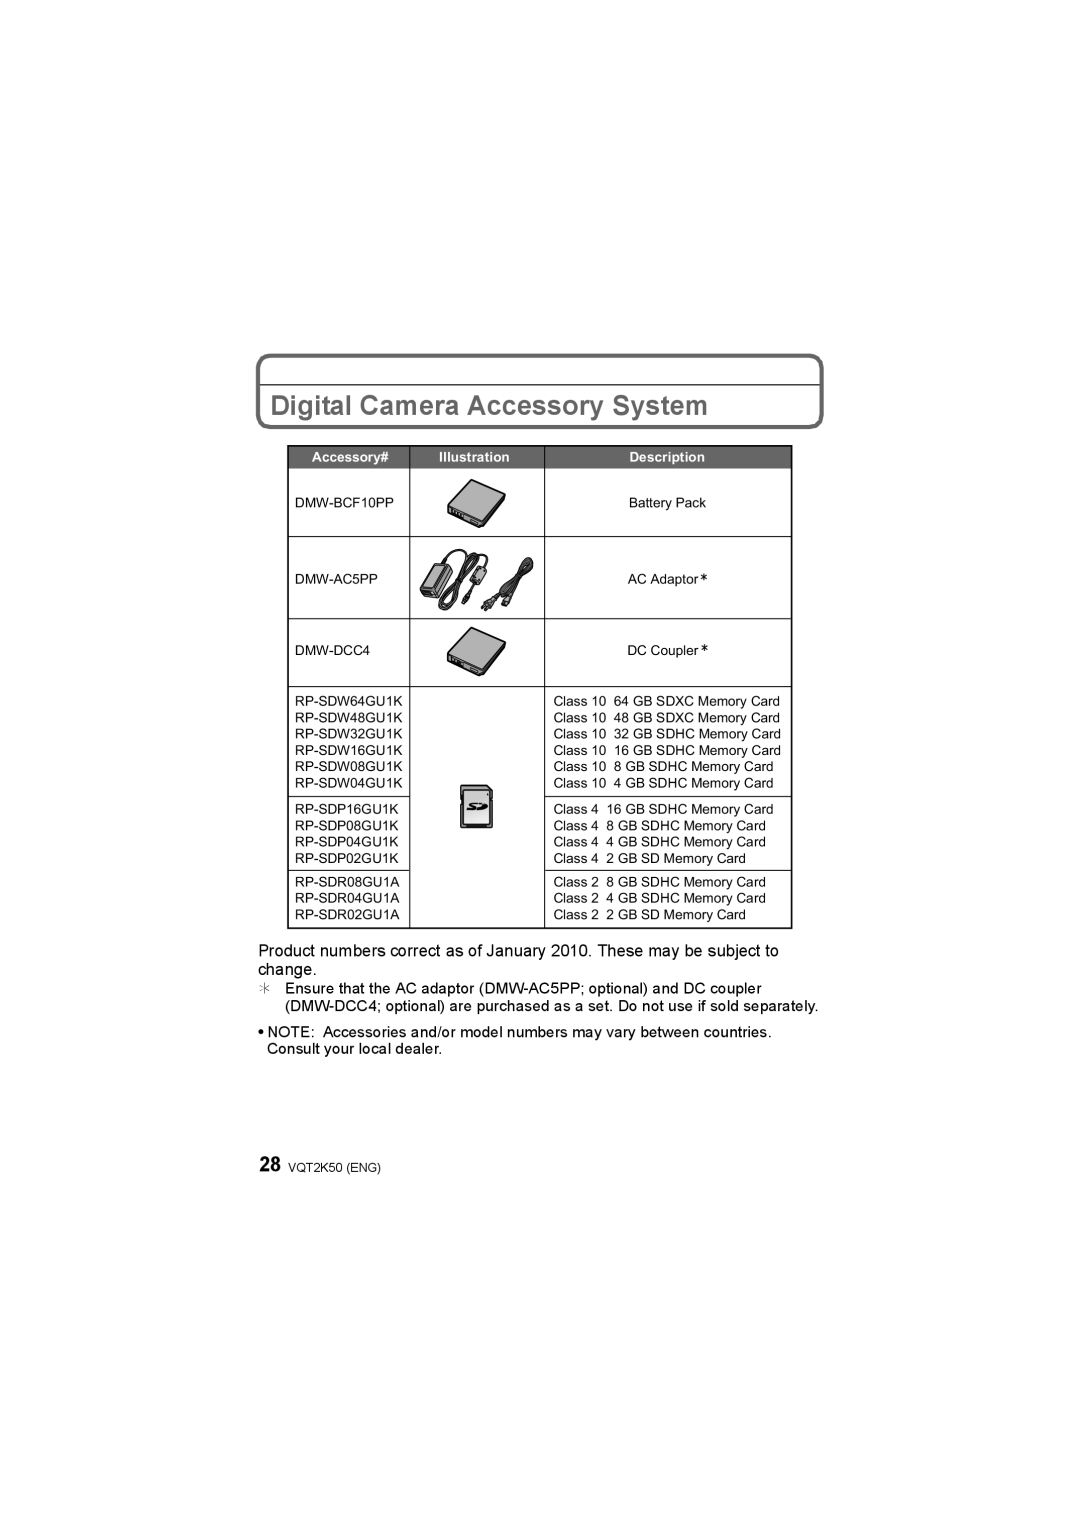 Panasonic DMC-FH20, DMC-FH3, DMC-FH1 Digital Camera Accessory System, Accessory#, Illustration, Description 